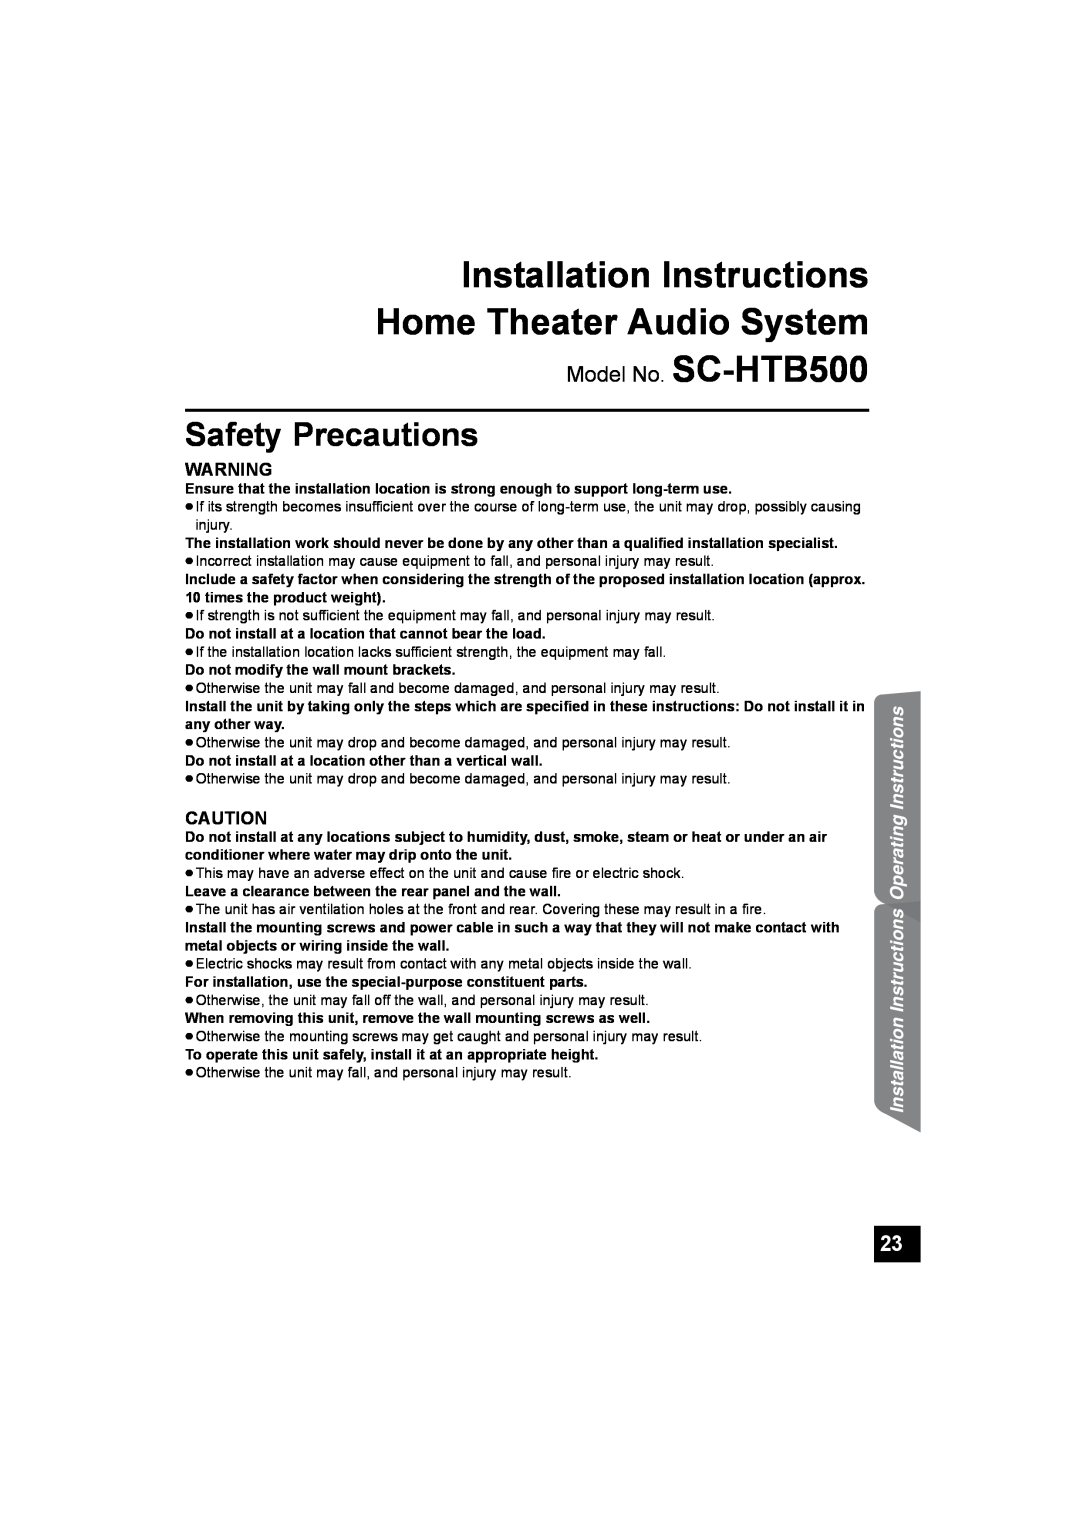 Panasonic Installation Instructions, Home Theater Audio System, Safety Precautions, Model No. SC-HTB500 